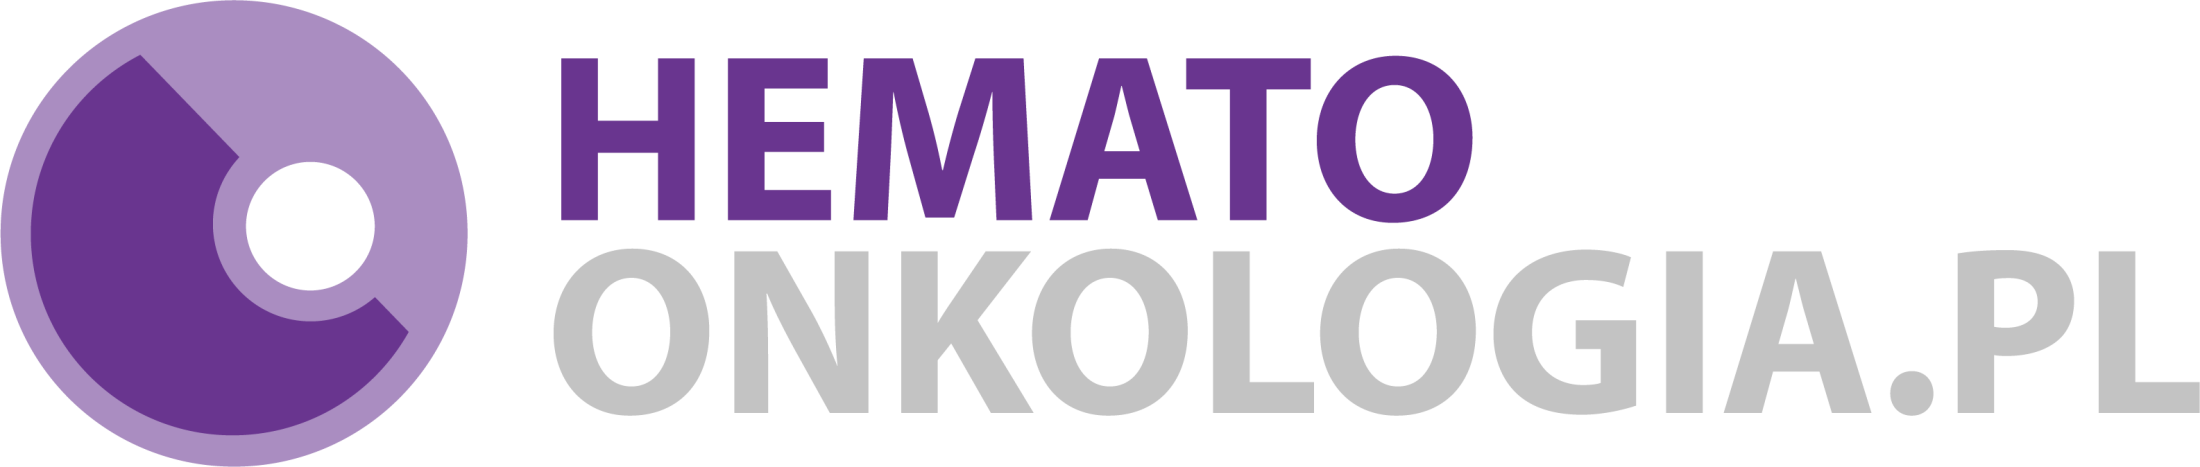 Logo Hematoonkologia